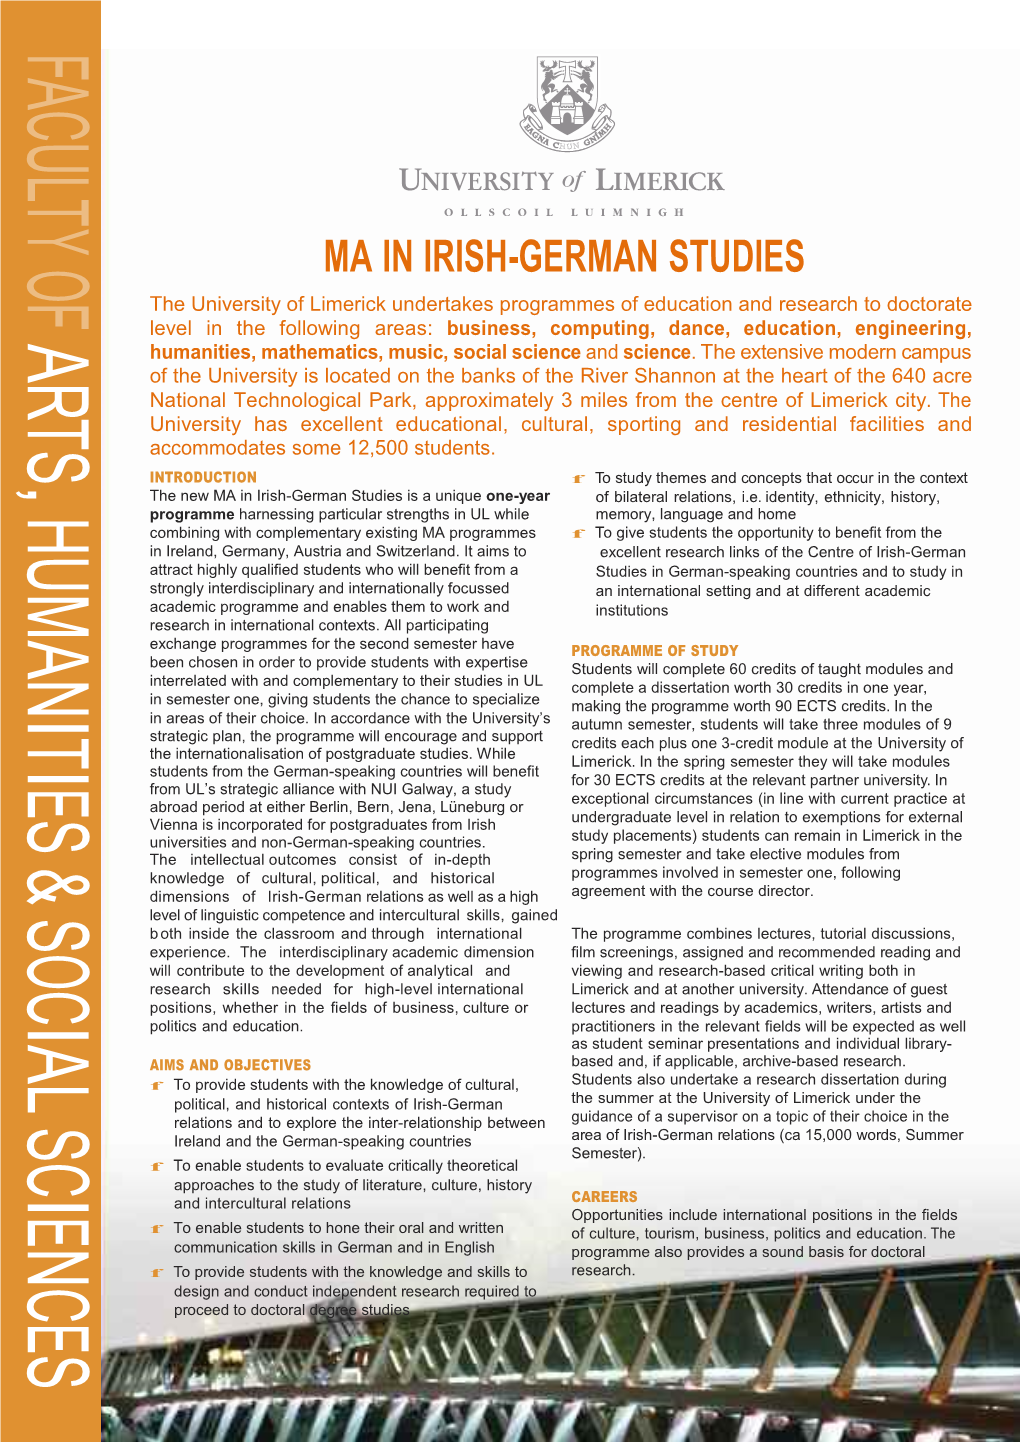 Ma in Irish-German Studies